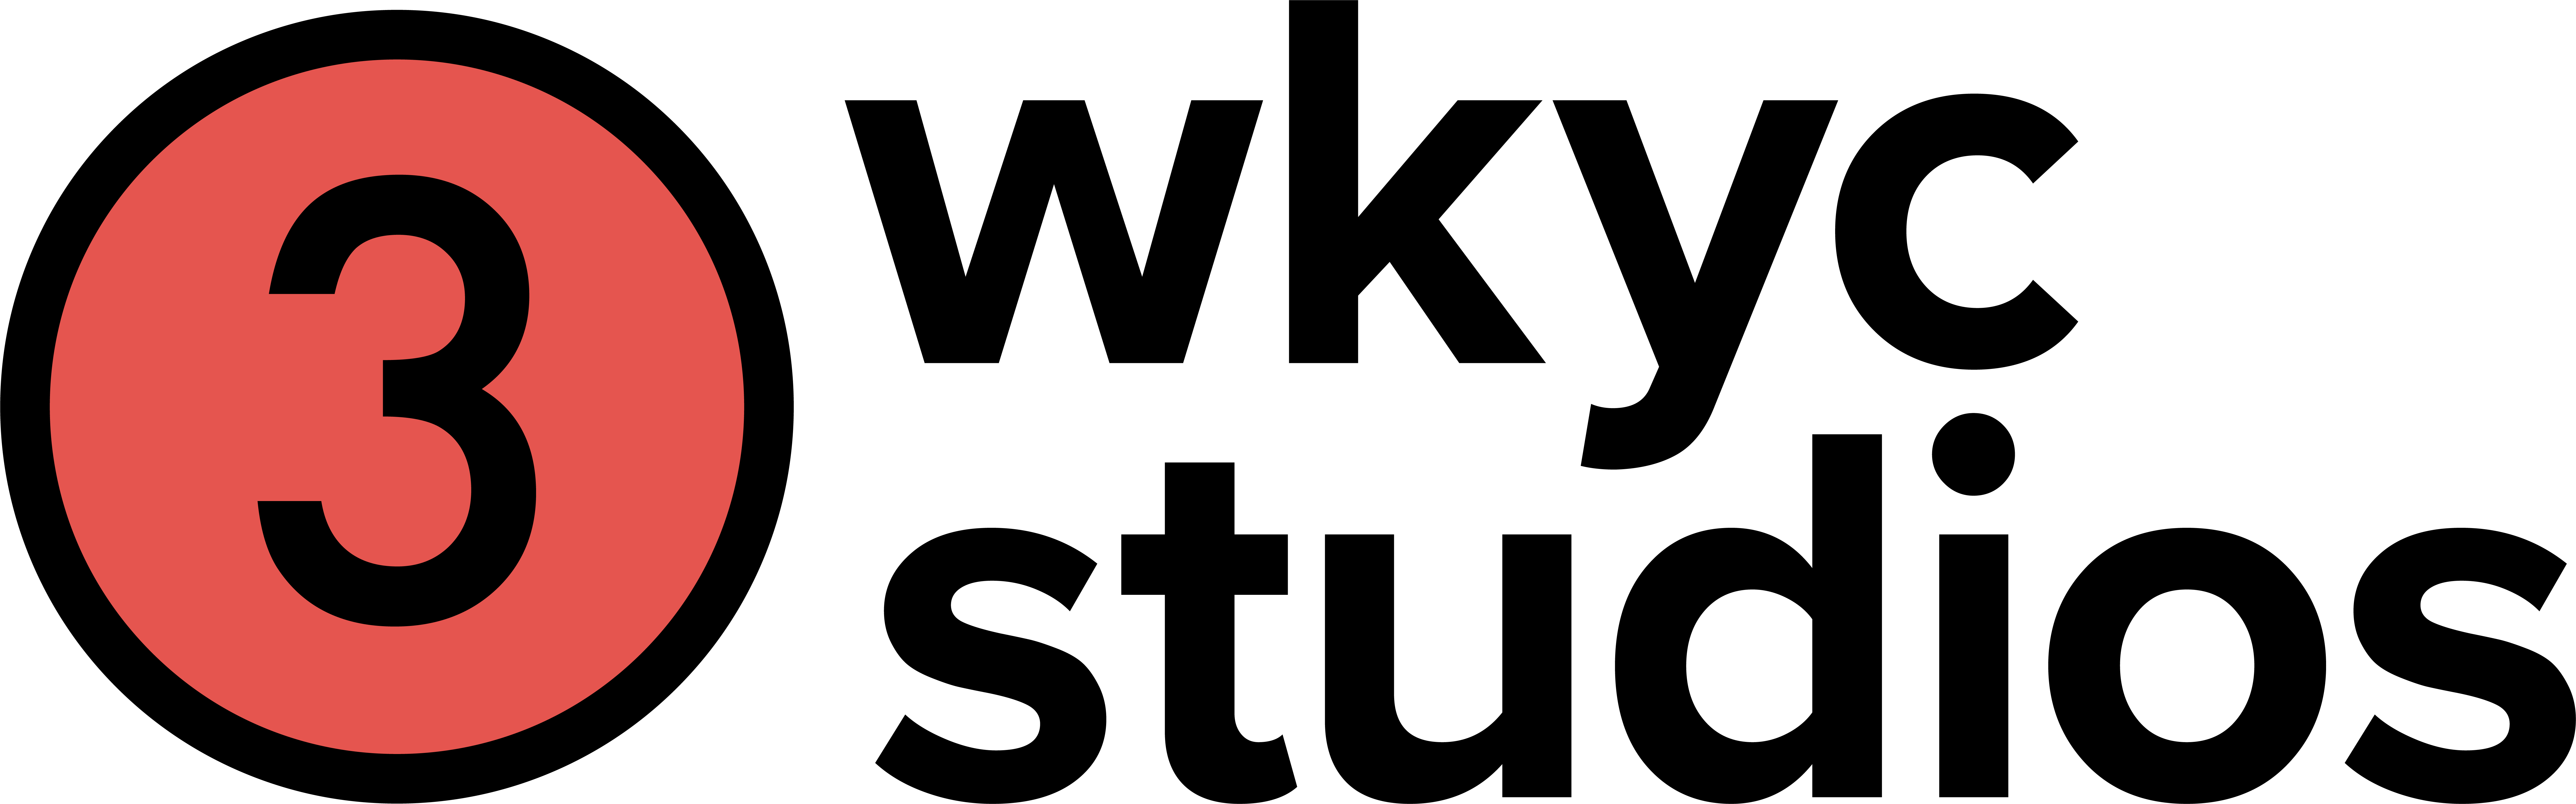 WKYC_ red 3 studios logo - black copy